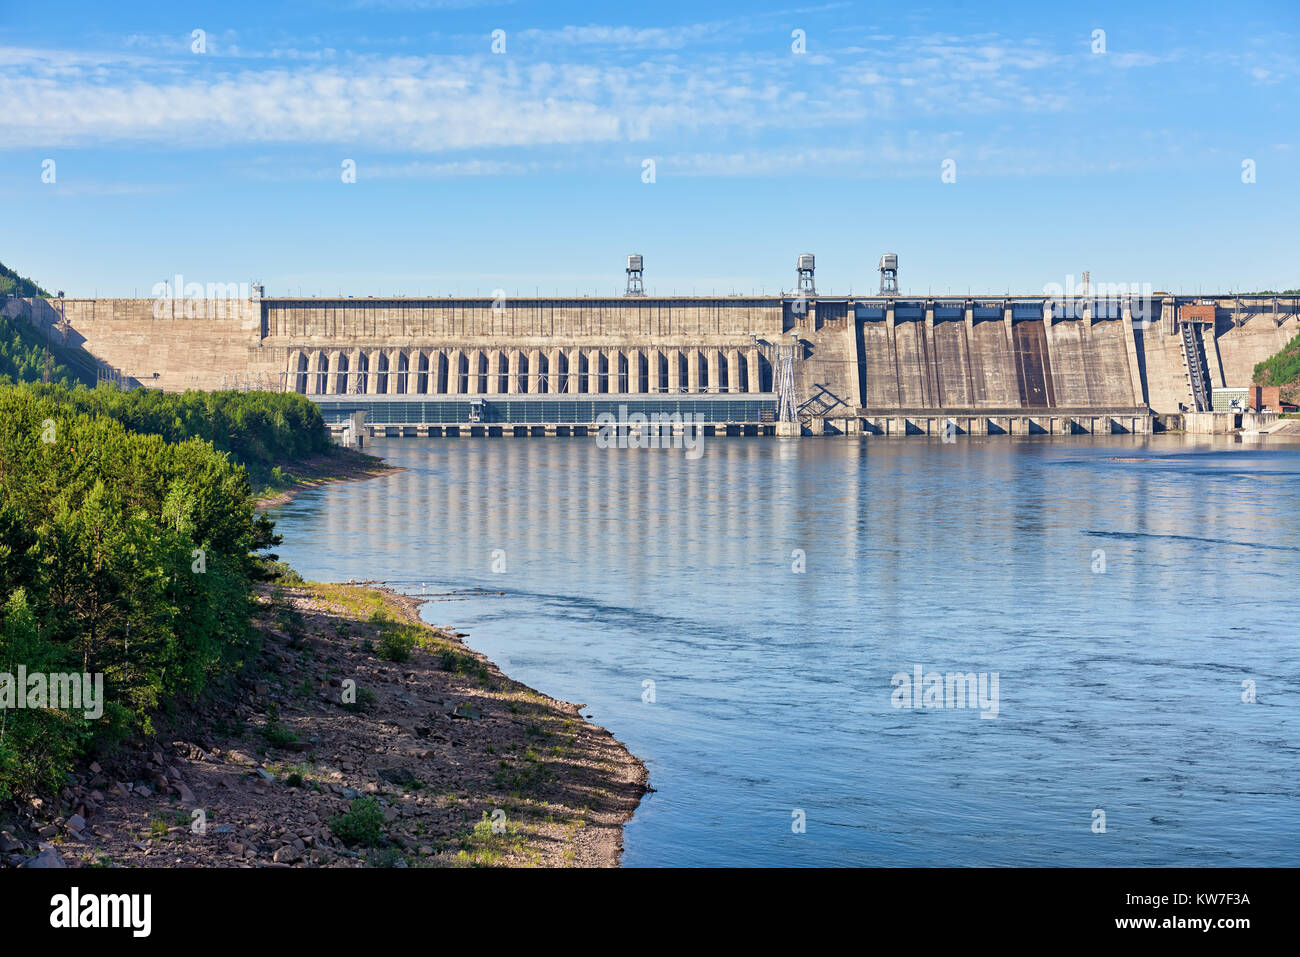 Krasnoyarsk dam. Powerful hydroelectric power station in Siberia on Yenisei River. Russia Stock Photo